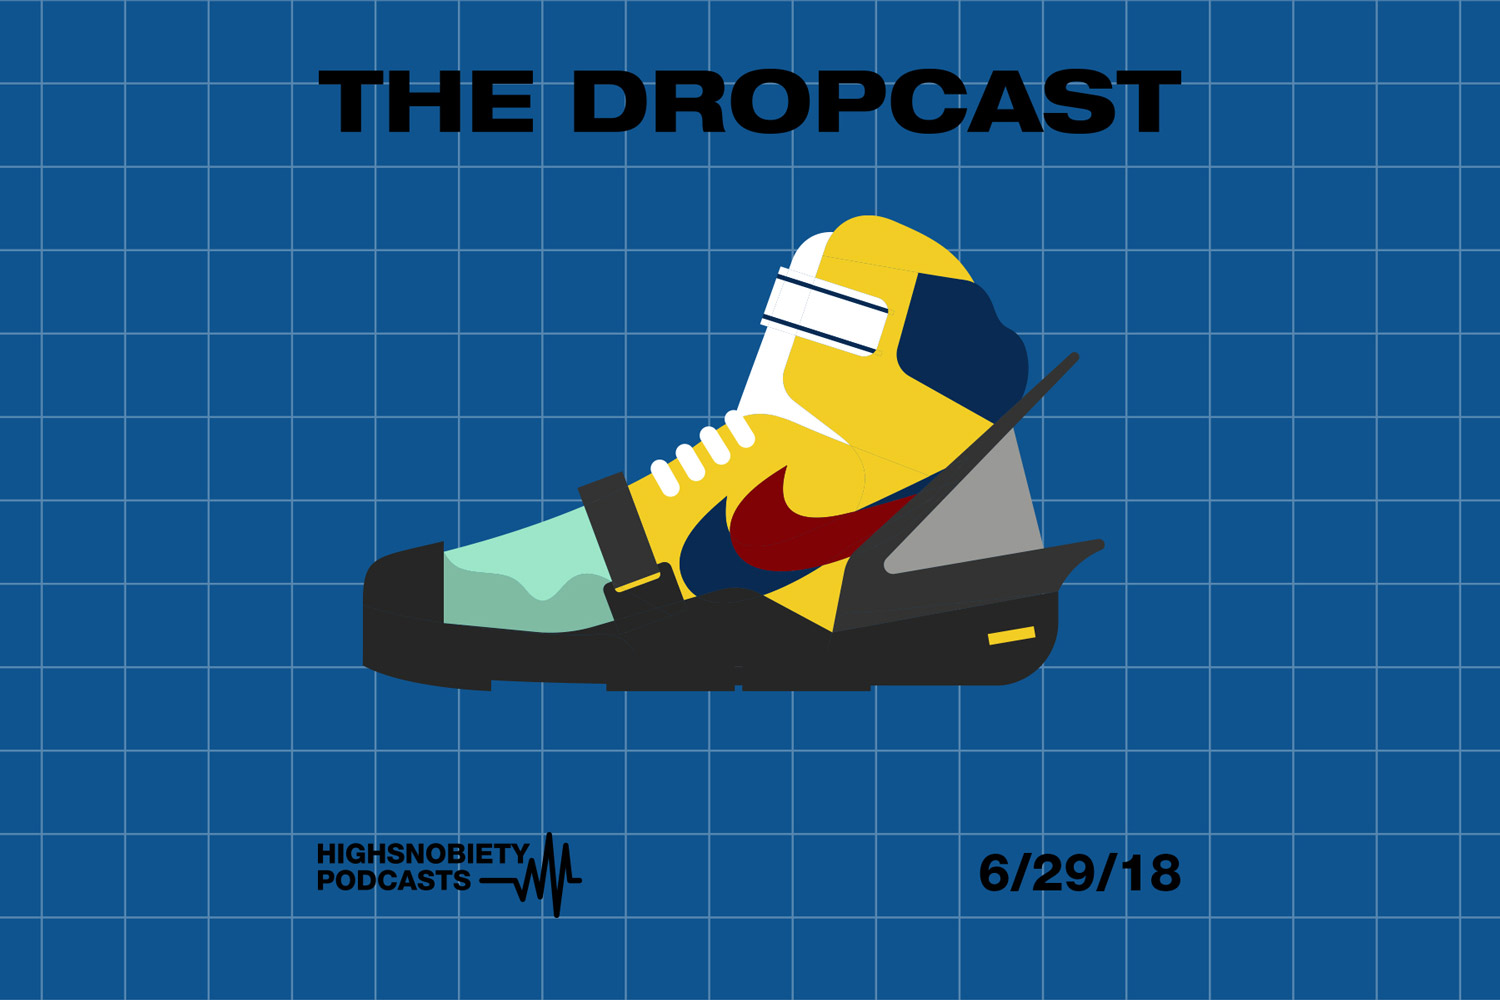 The Dropcast cover 00 ebay